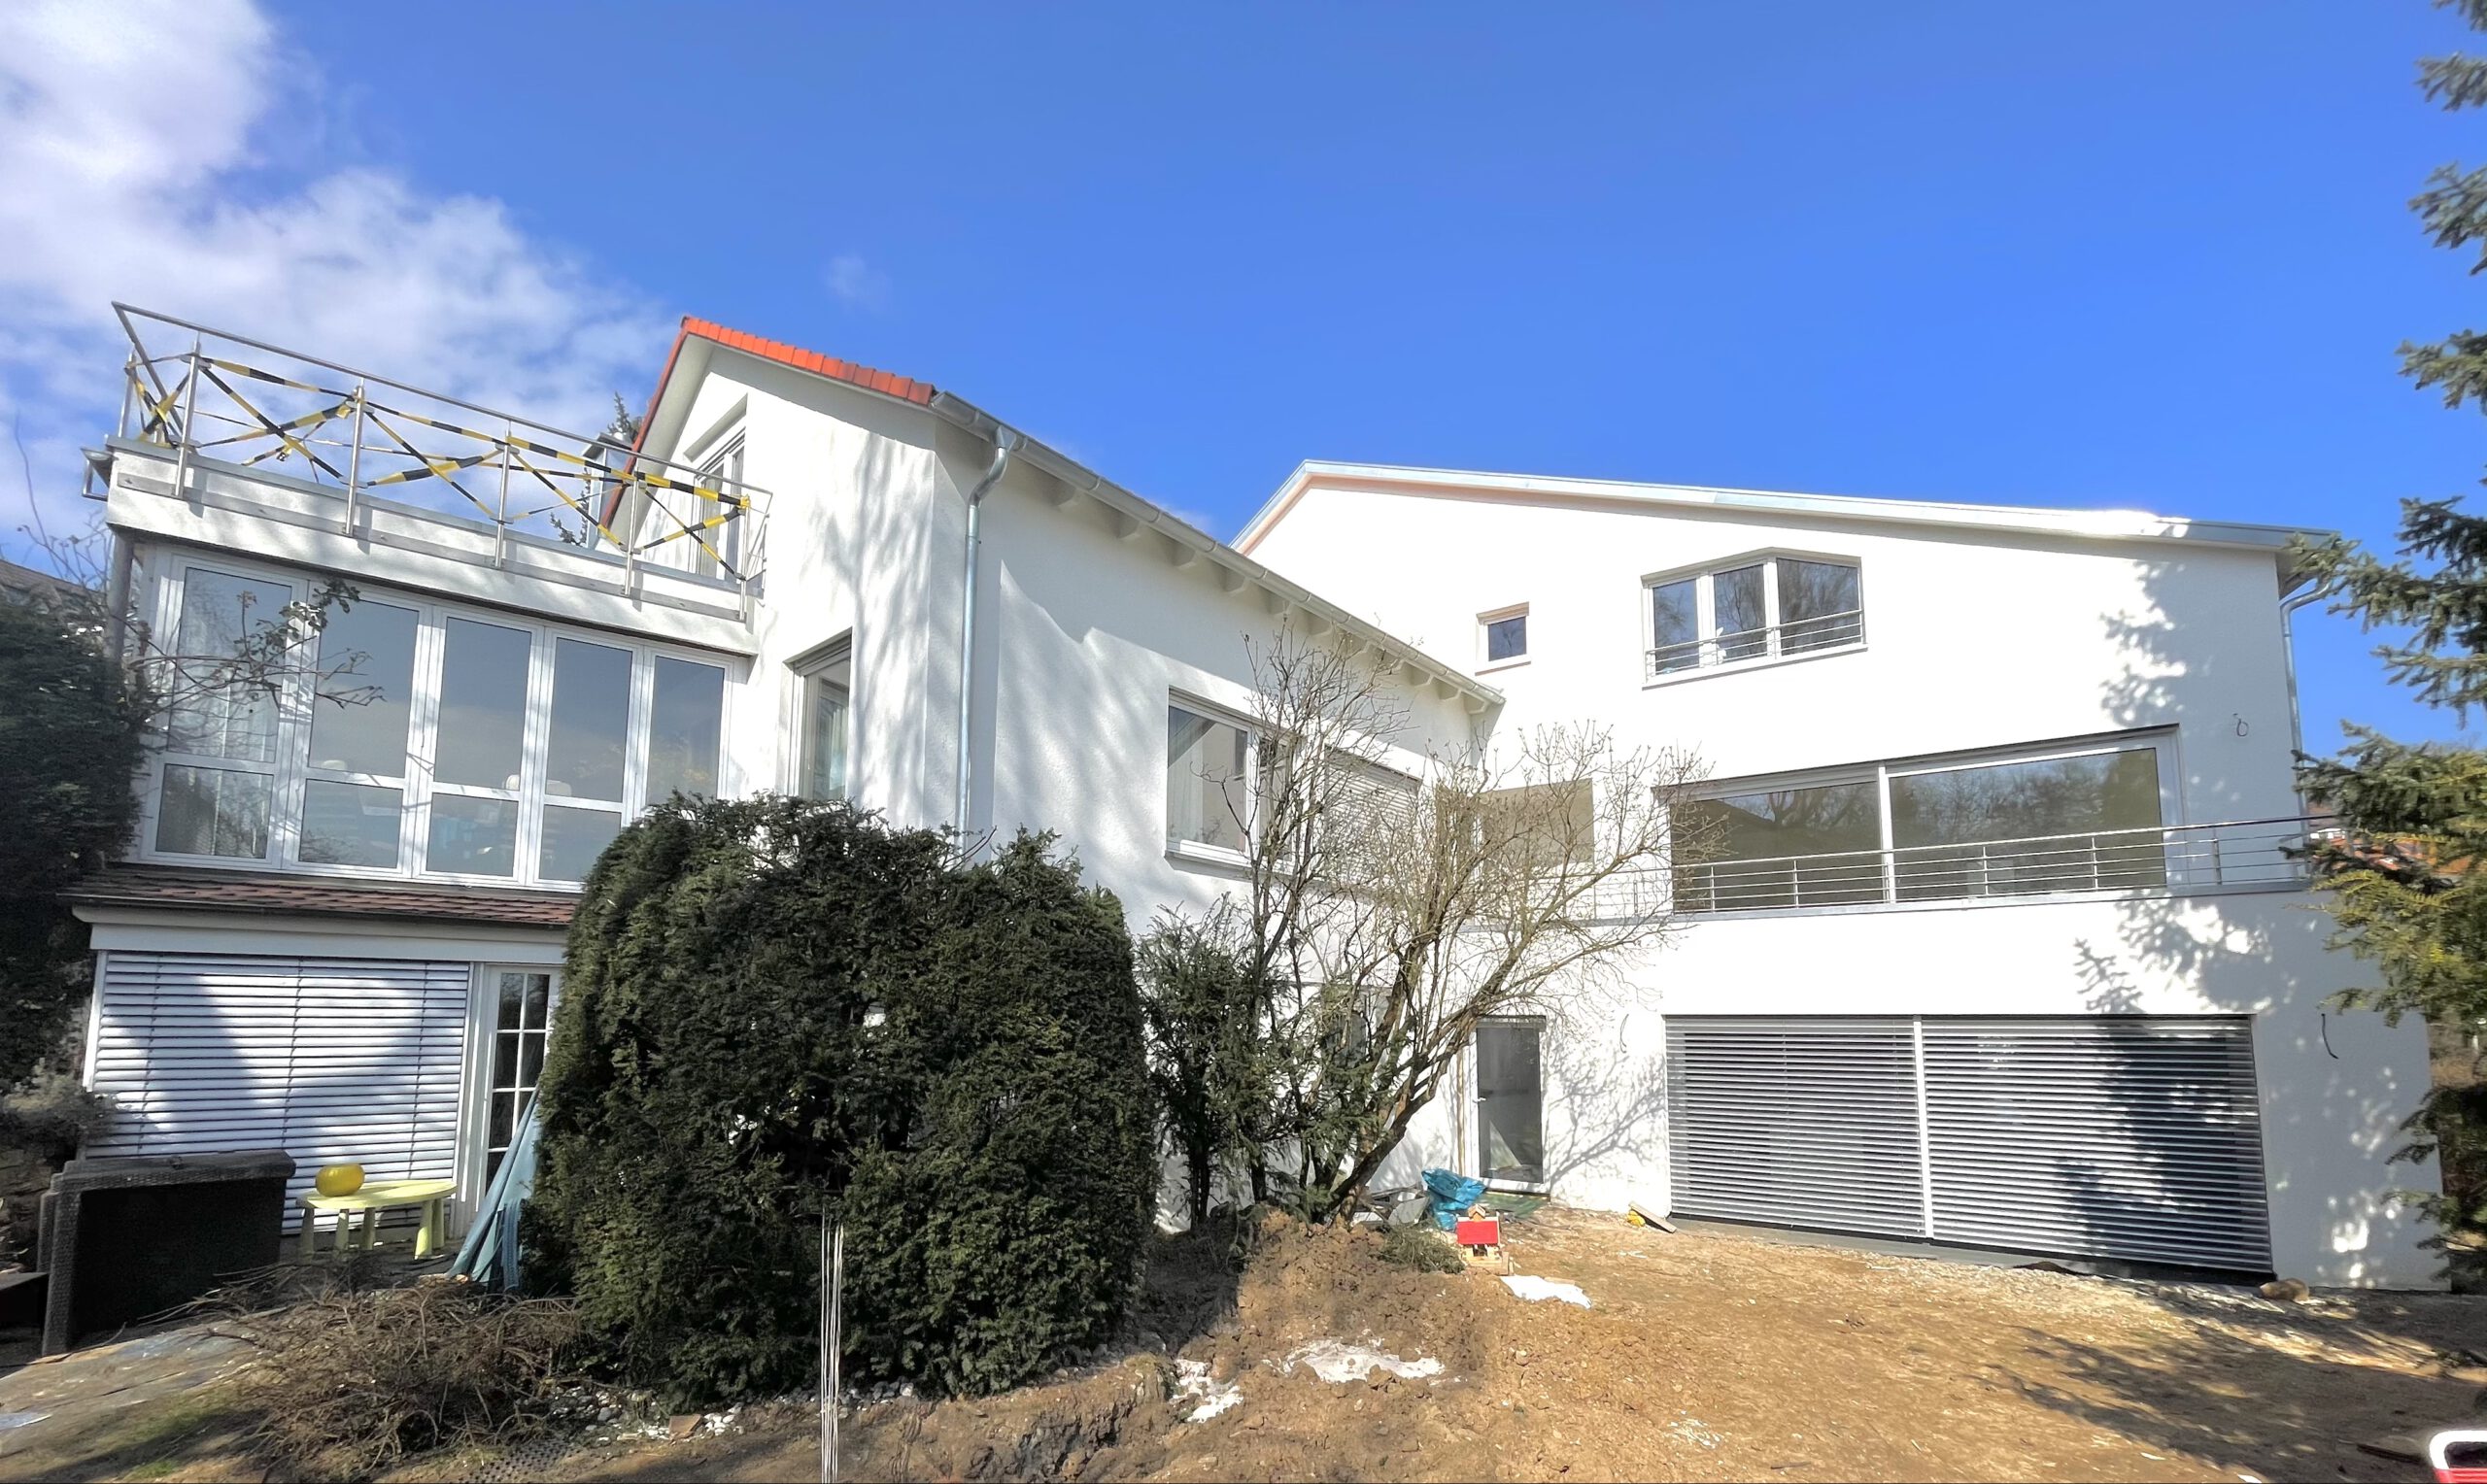 Zogjani Bauunternehmen - Referenz: Mehrfamilienhaus in Stuttgart-Vaihingen